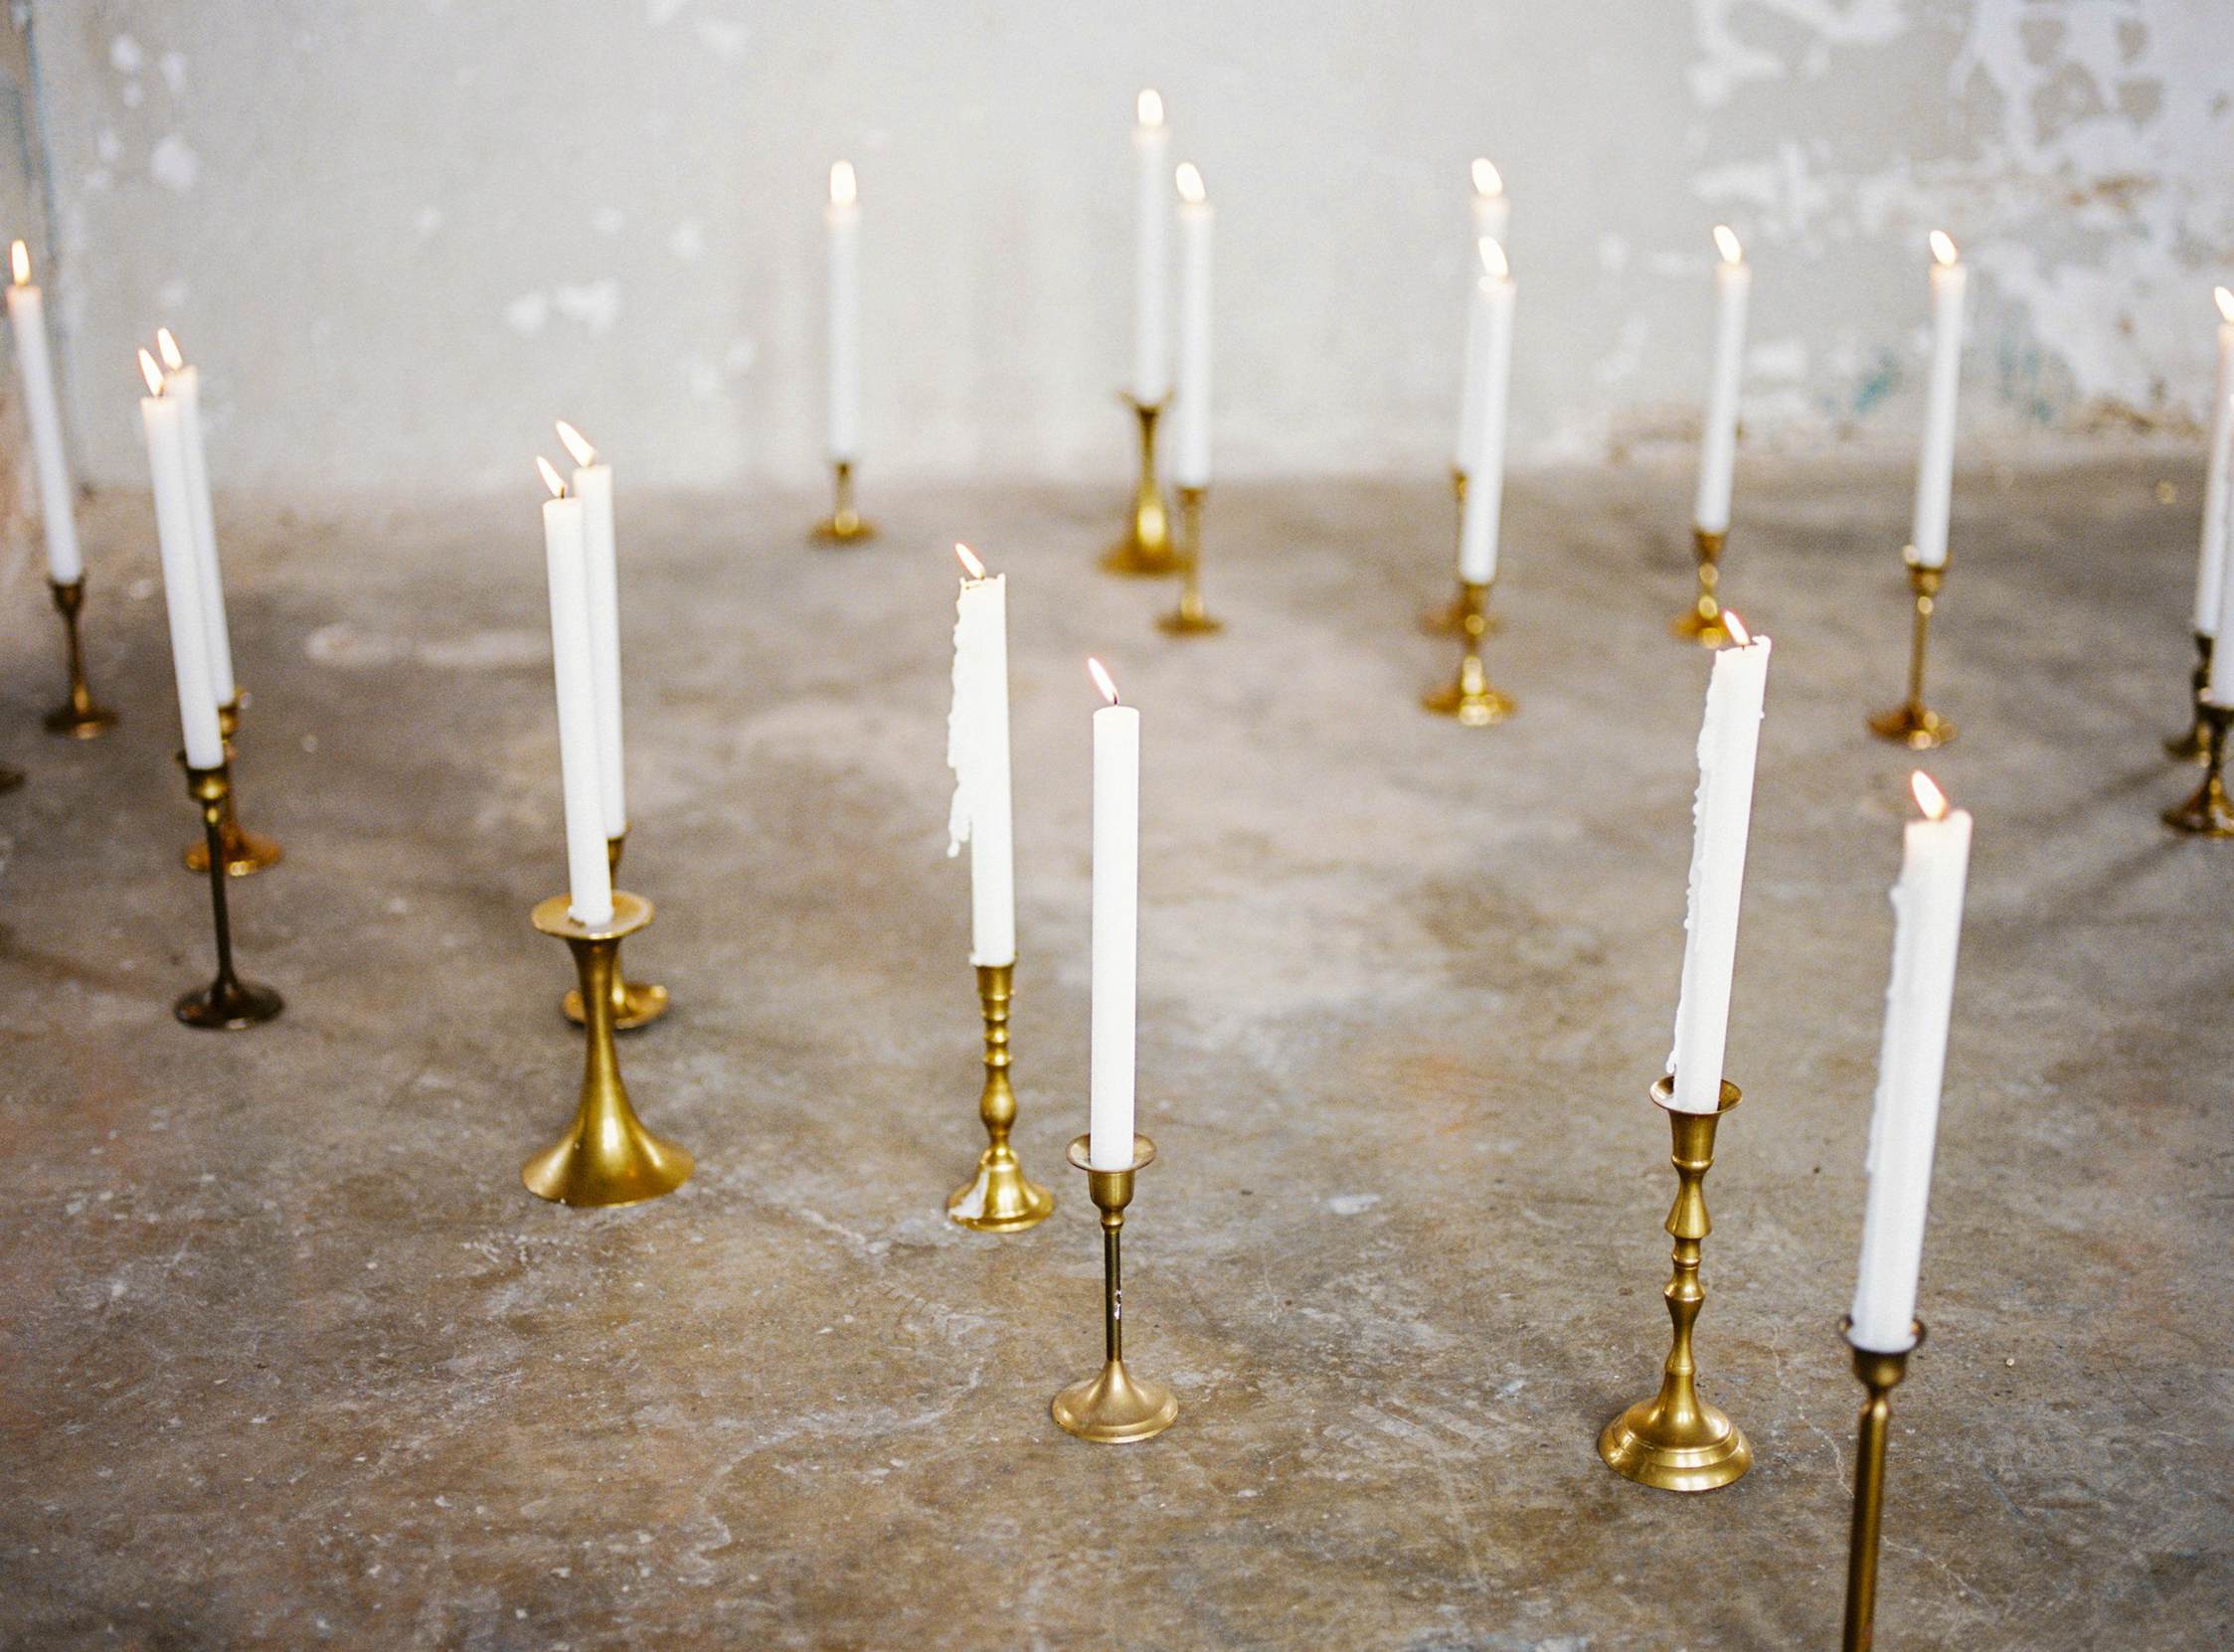 Fine art wedding photographer Minimalistic Editorial Wedding shoot - Wedding candles